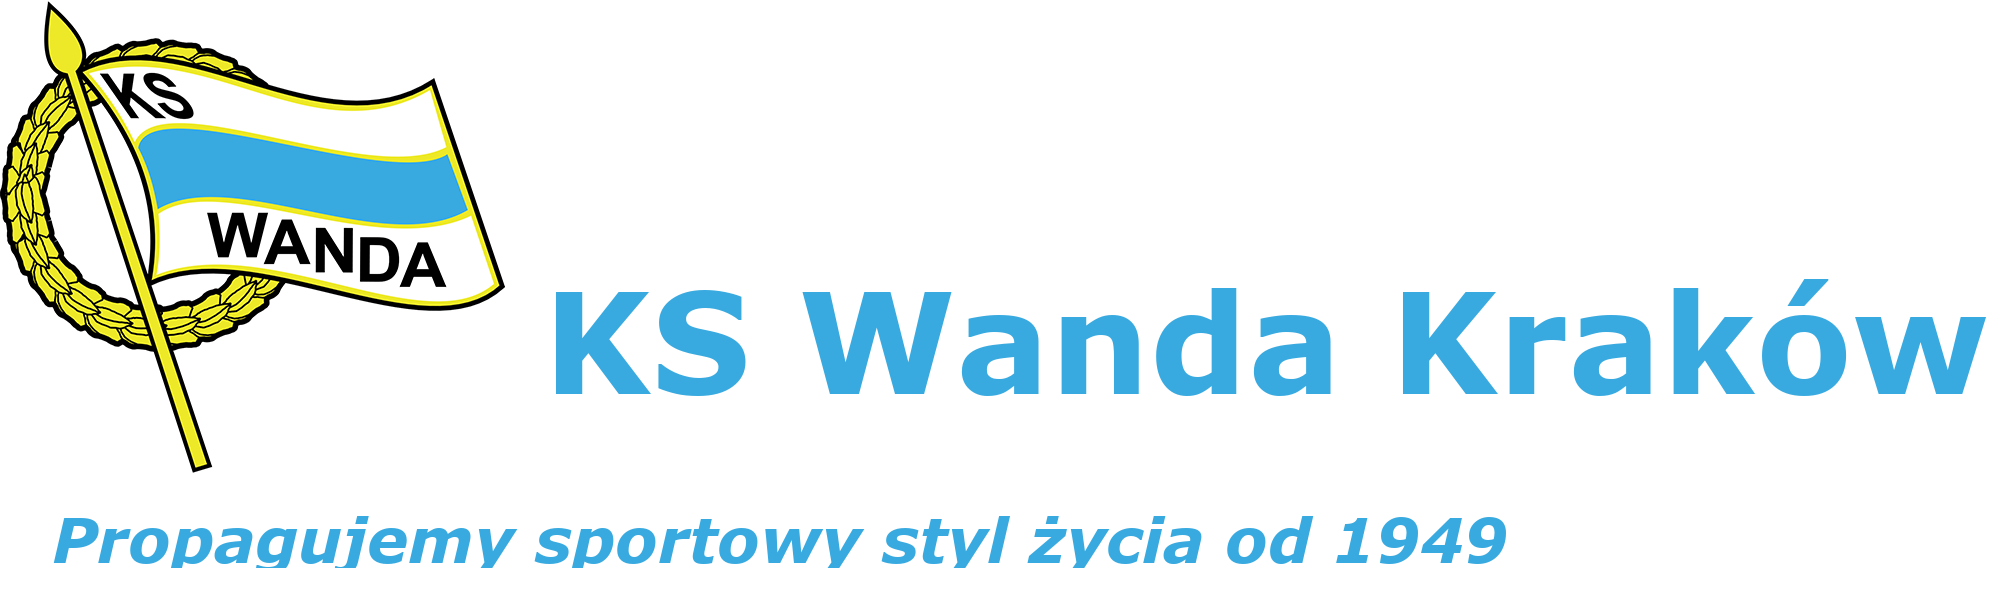 KS Wanda Kraków